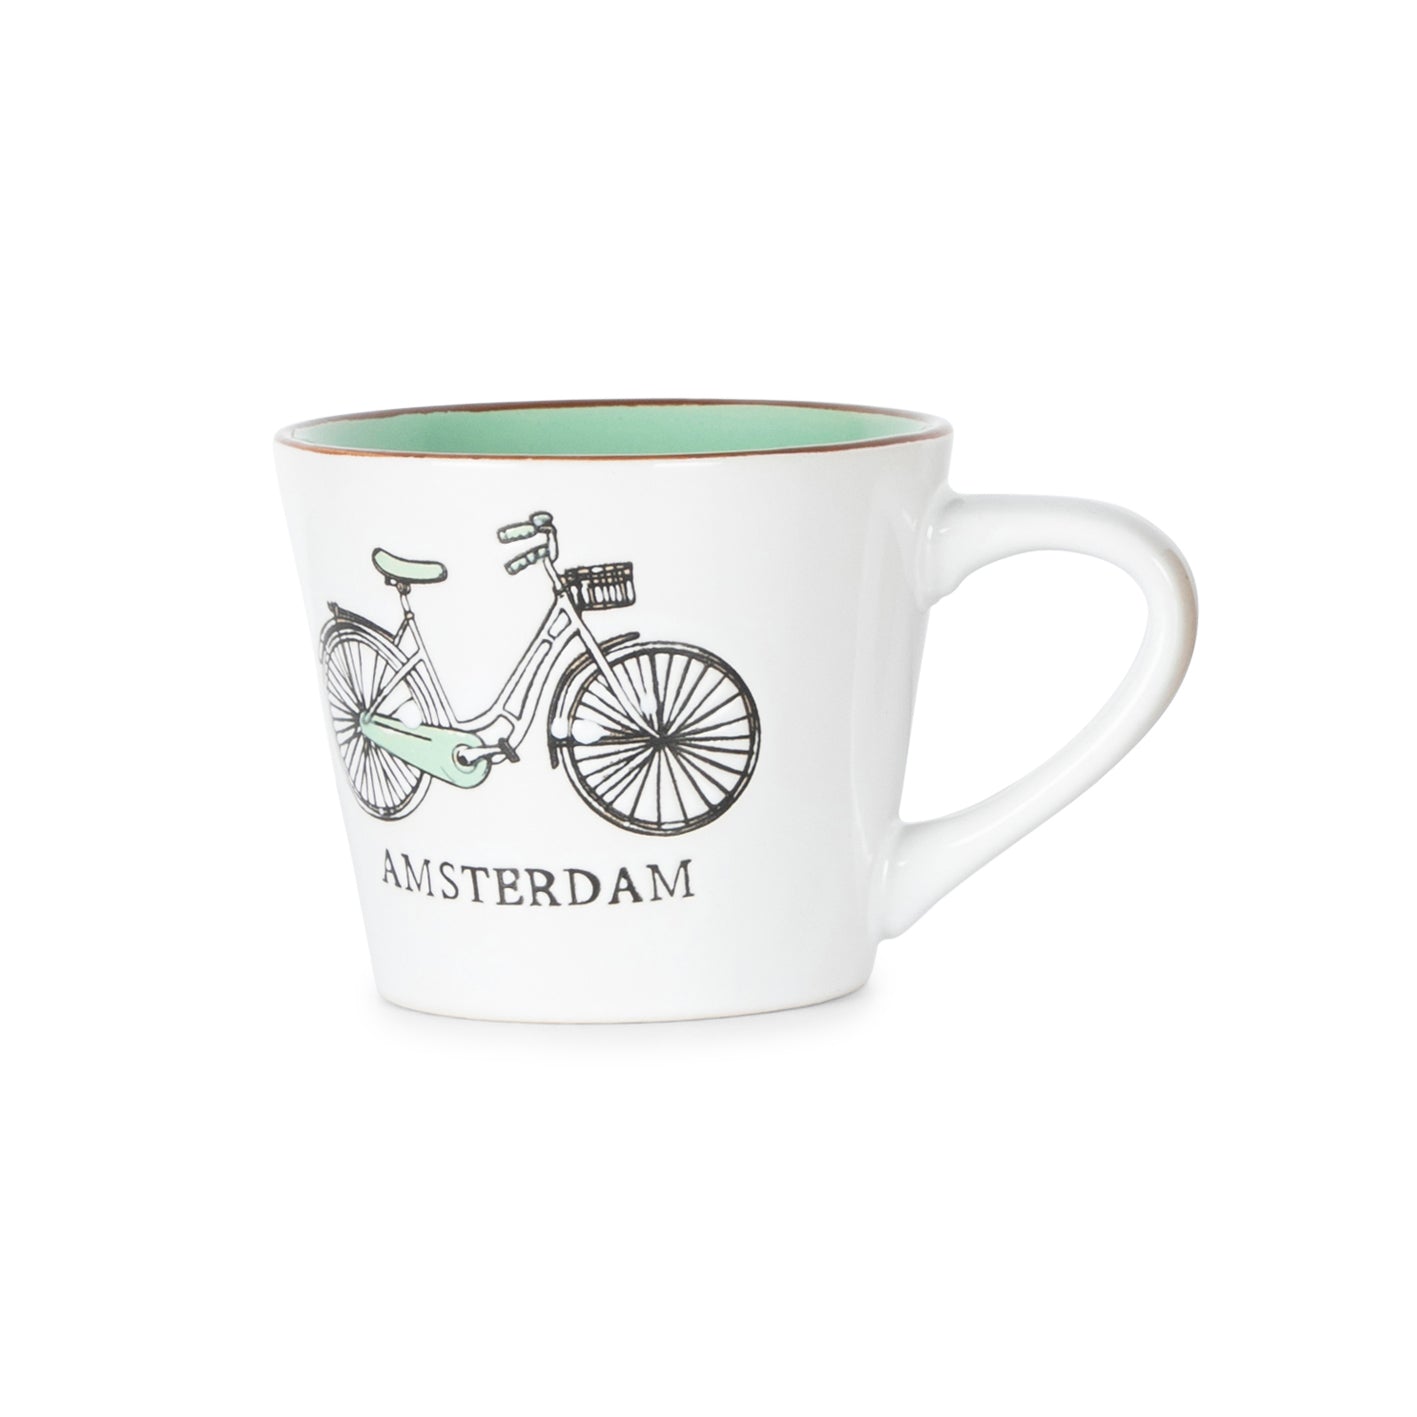 Silk mug - Amsterdam - Bike